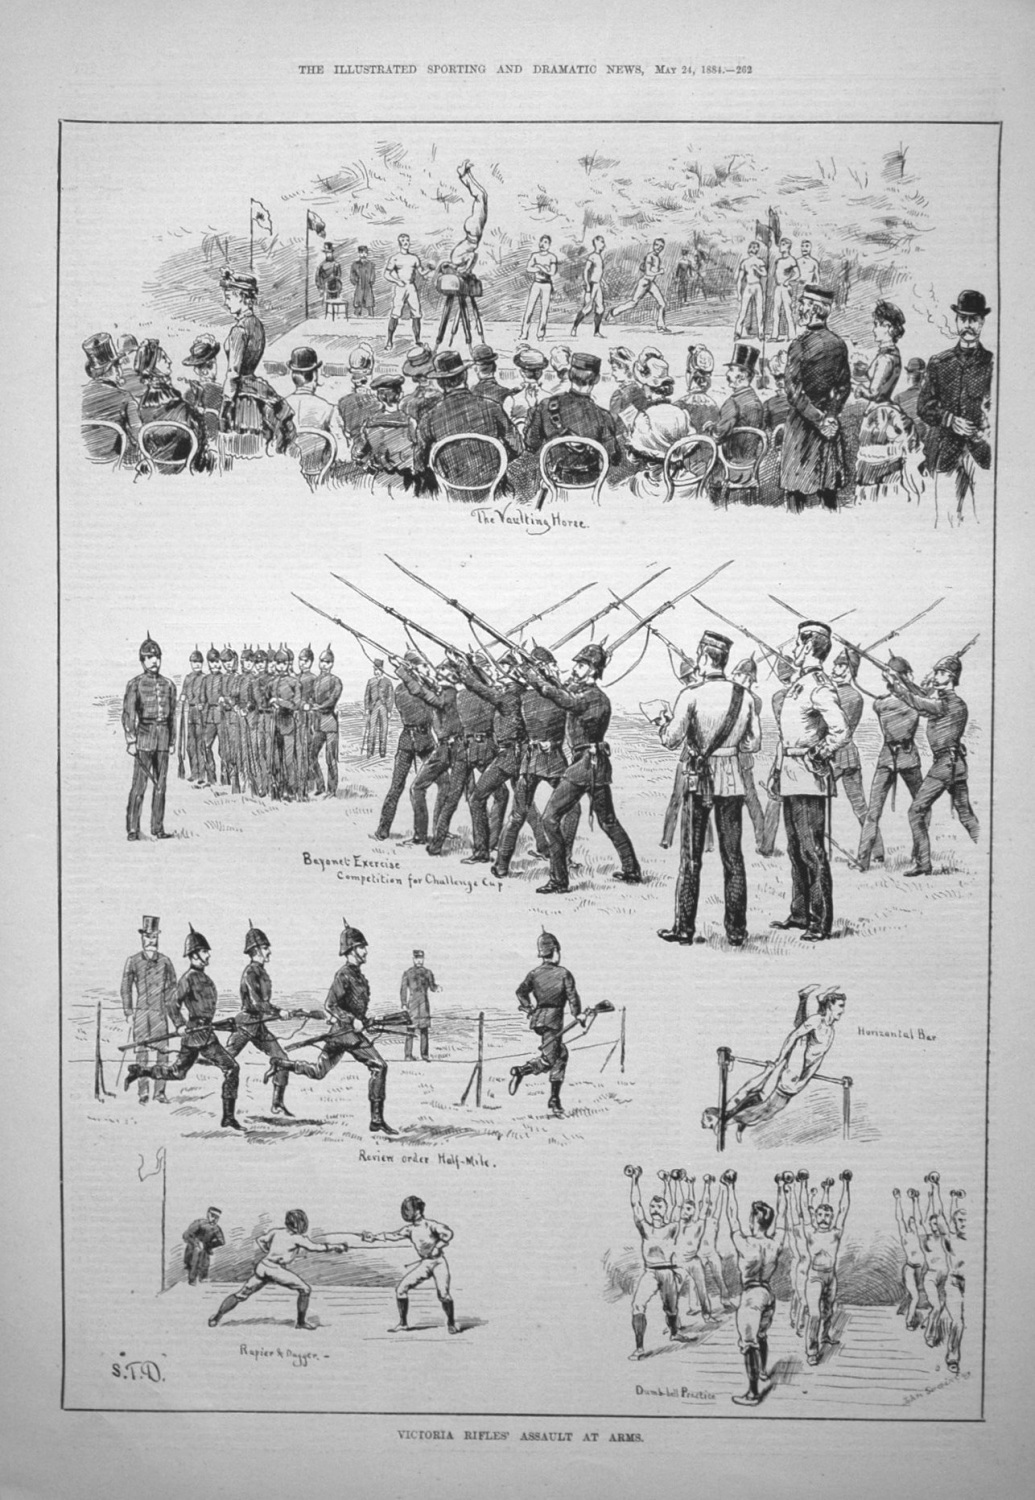 Victoria Rifles' Assault at Arms. 1884